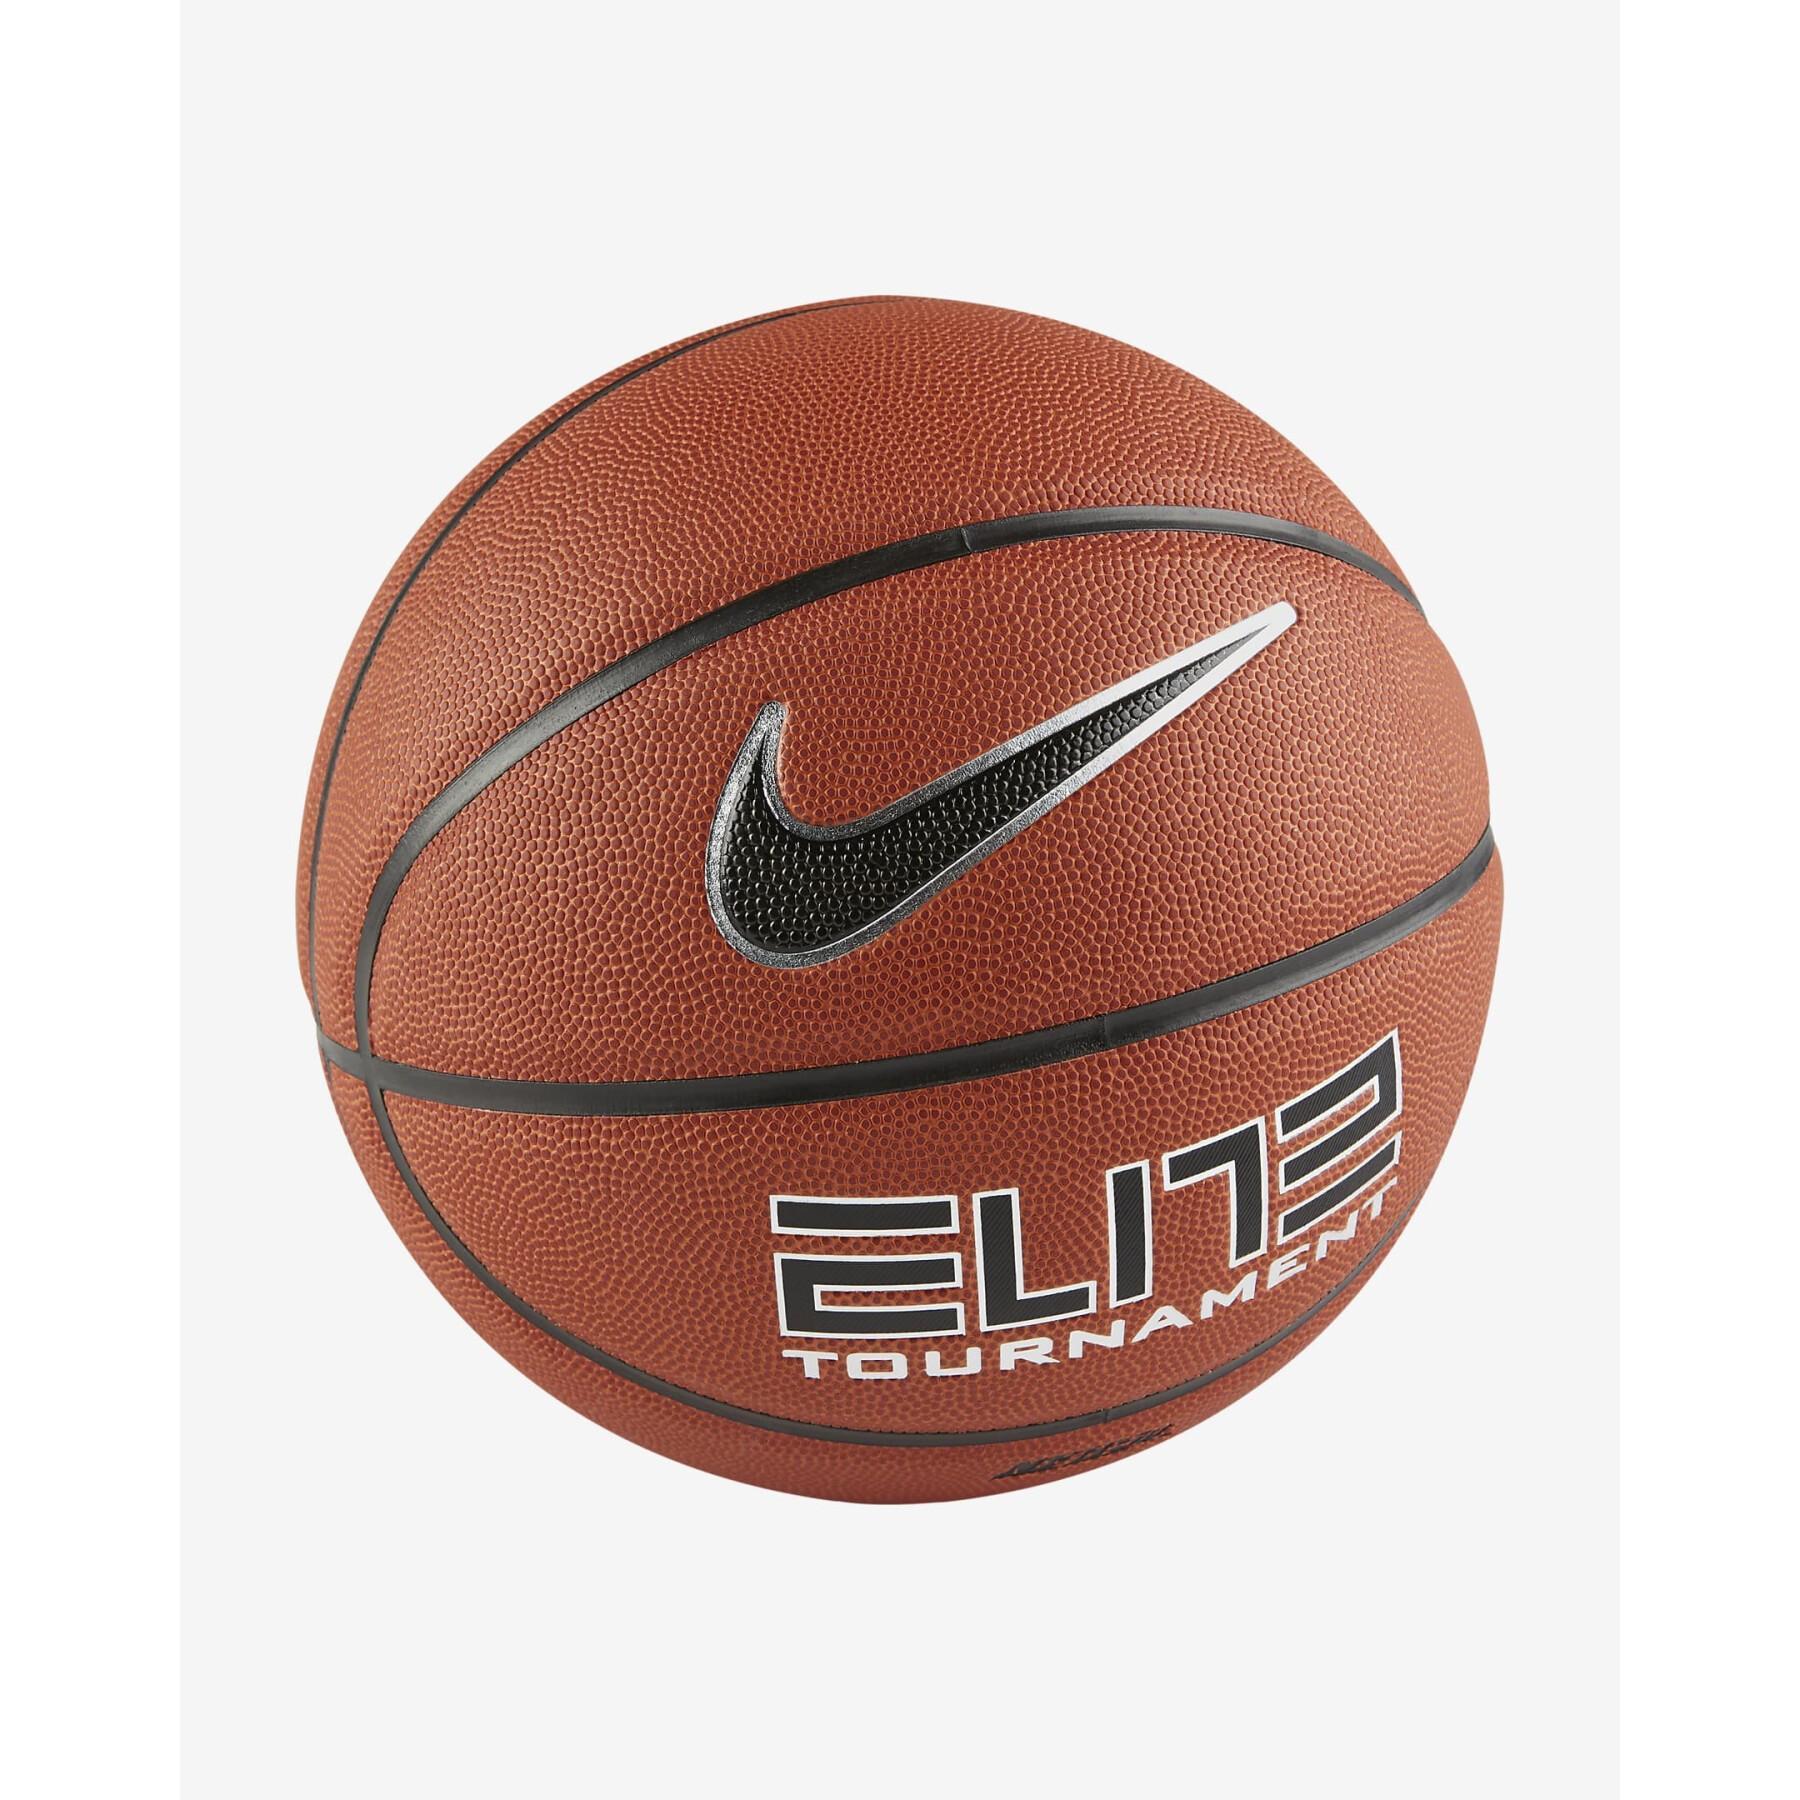 Ballong Nike elite tournament 8p